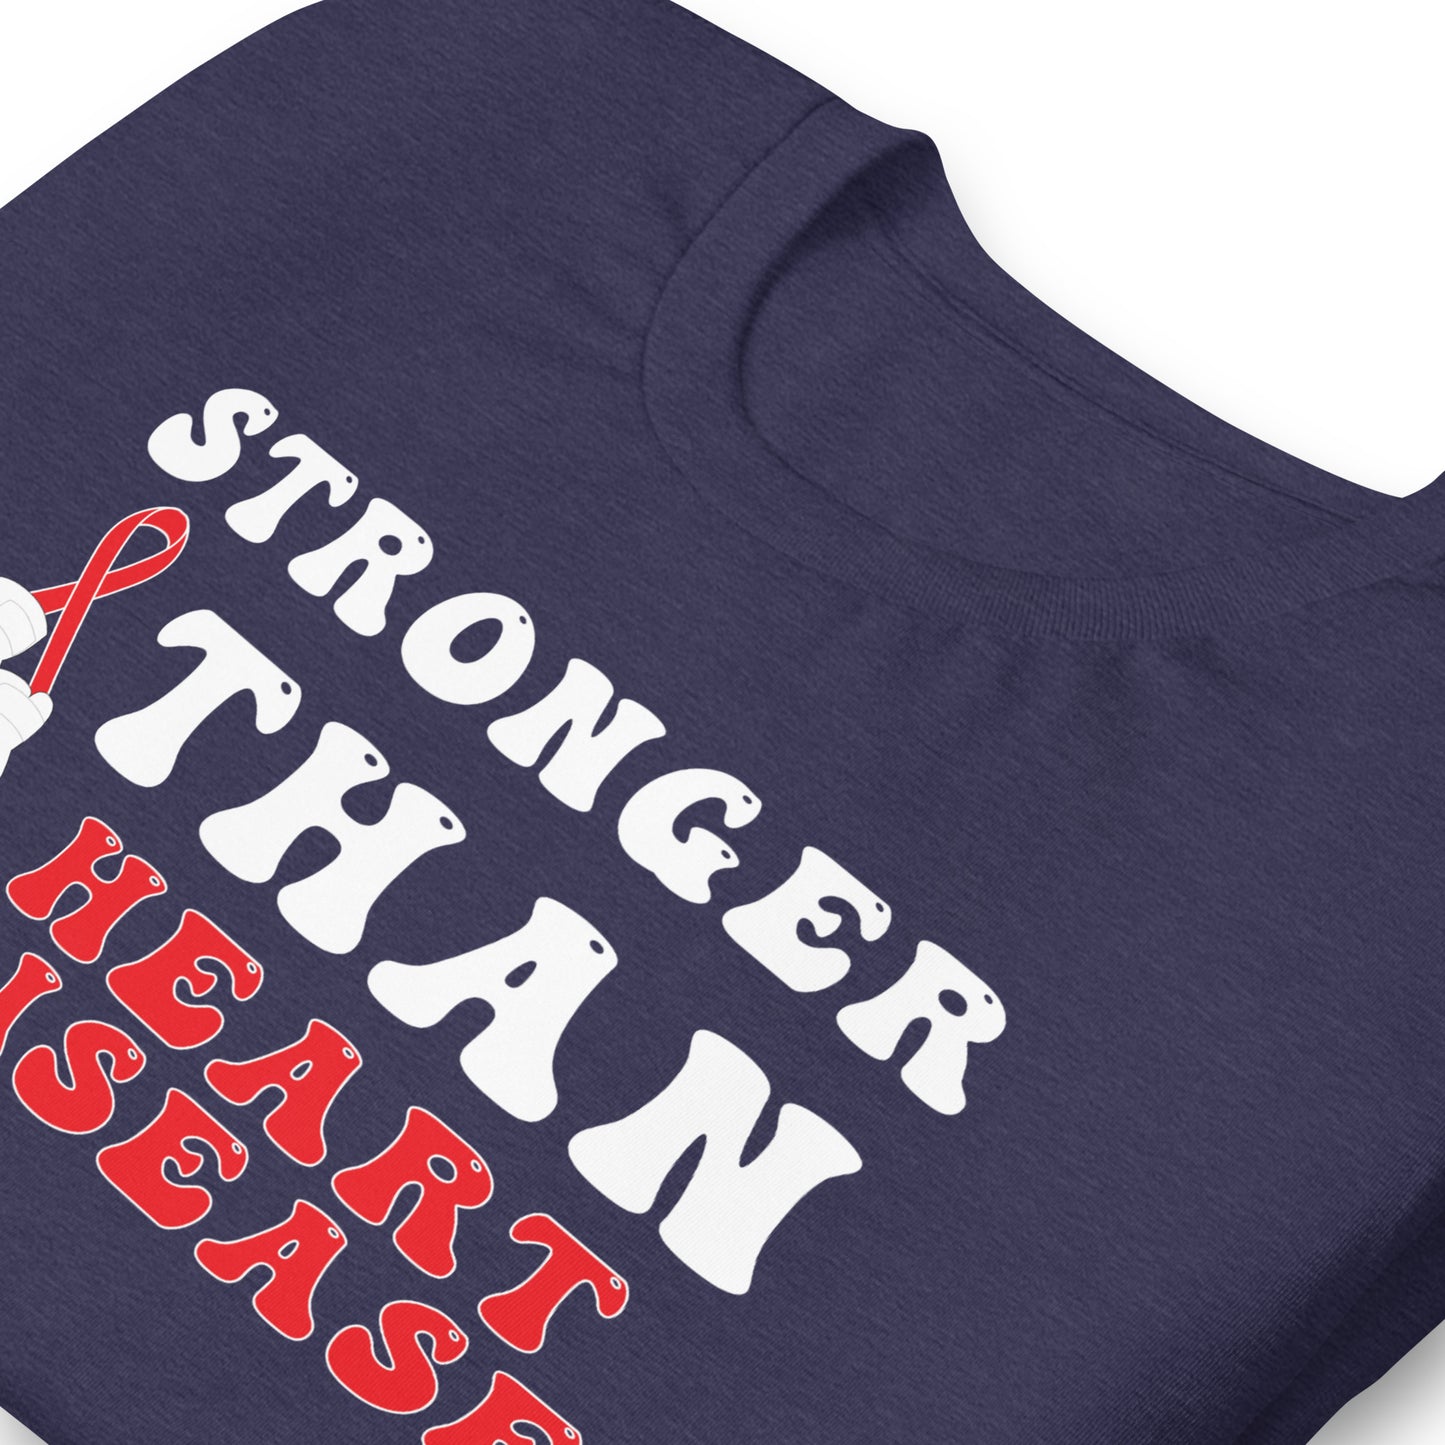 Stronger than Heart Disease Awareness Quality Cotton Bella Canvas Adult T-Shirt